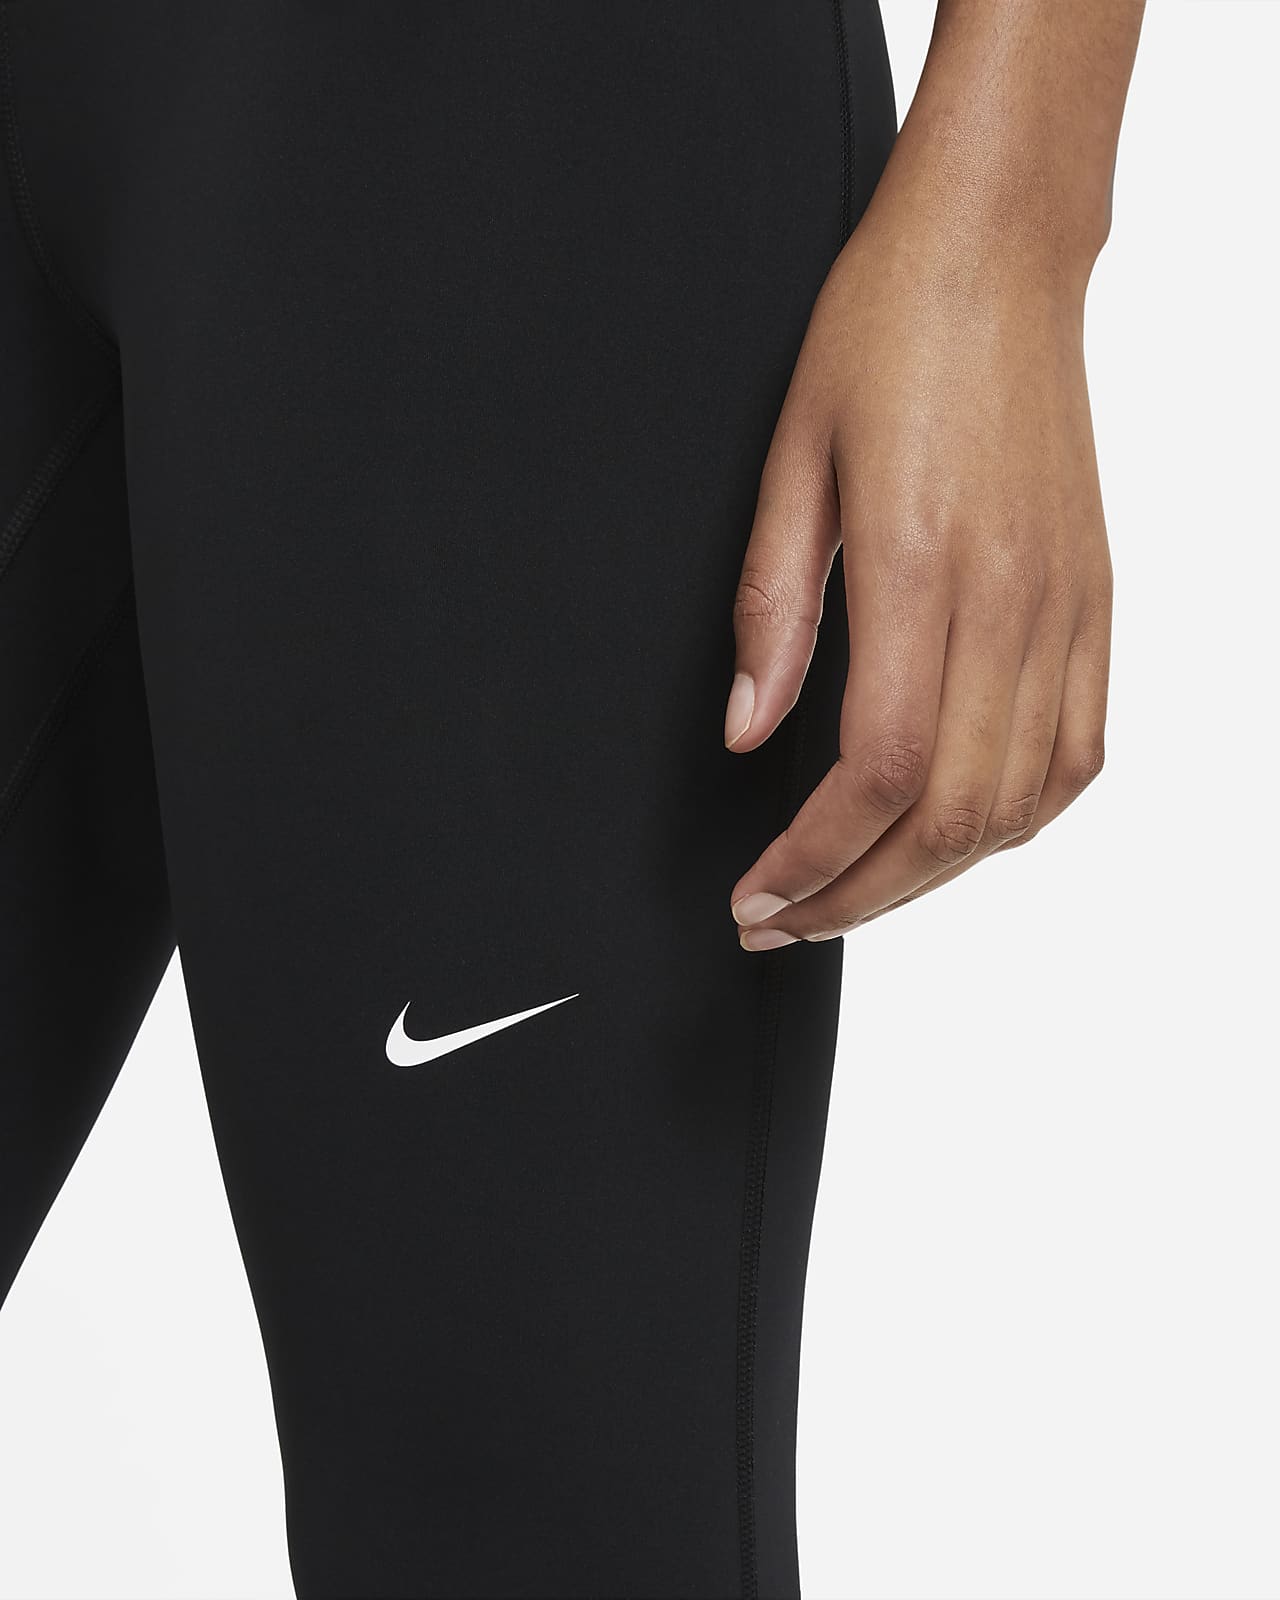 Nike Pro 365 Women's Black/White Mid-Rise Crop Leggings (CZ9803